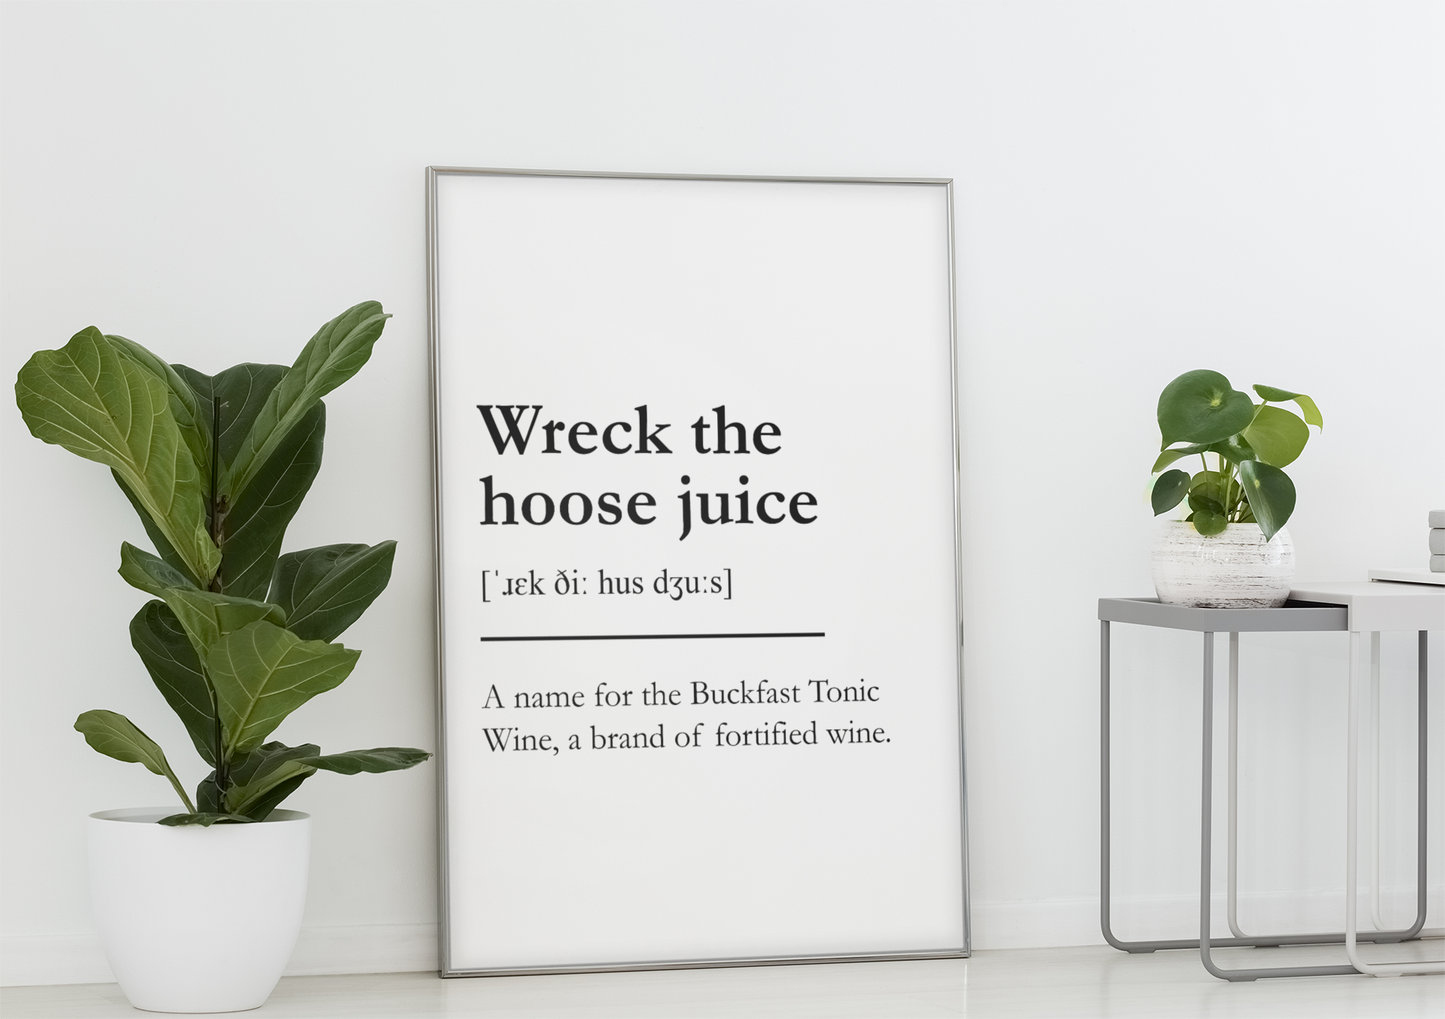 "Wreck the hoose juice" - Scottish Slang